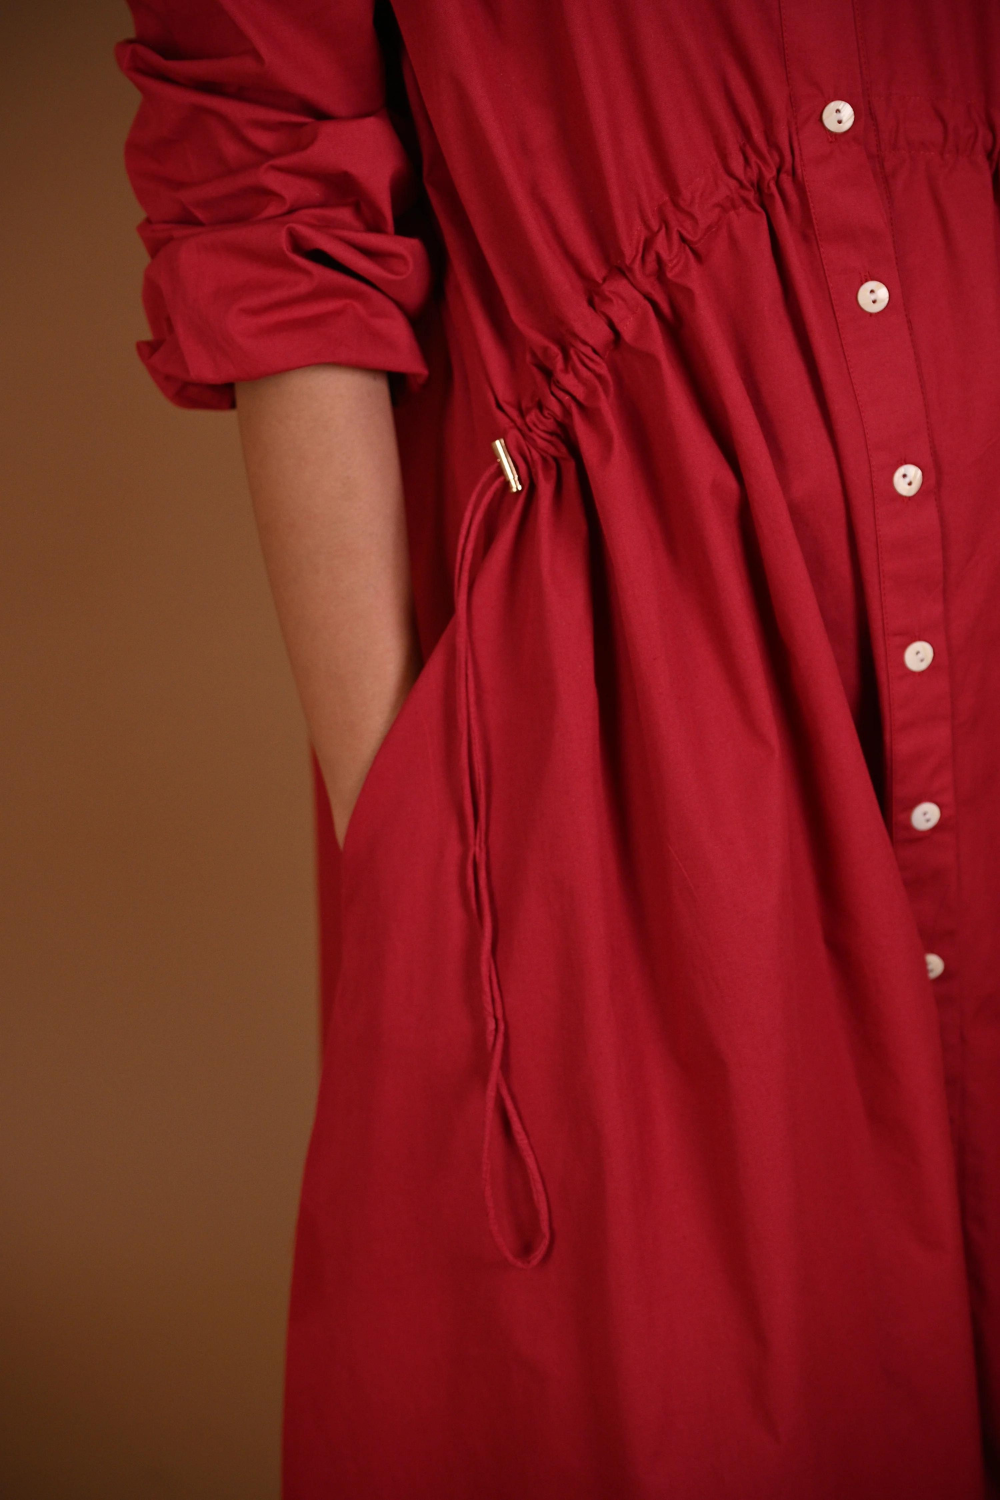 PLAIN JANE DRESS- RED